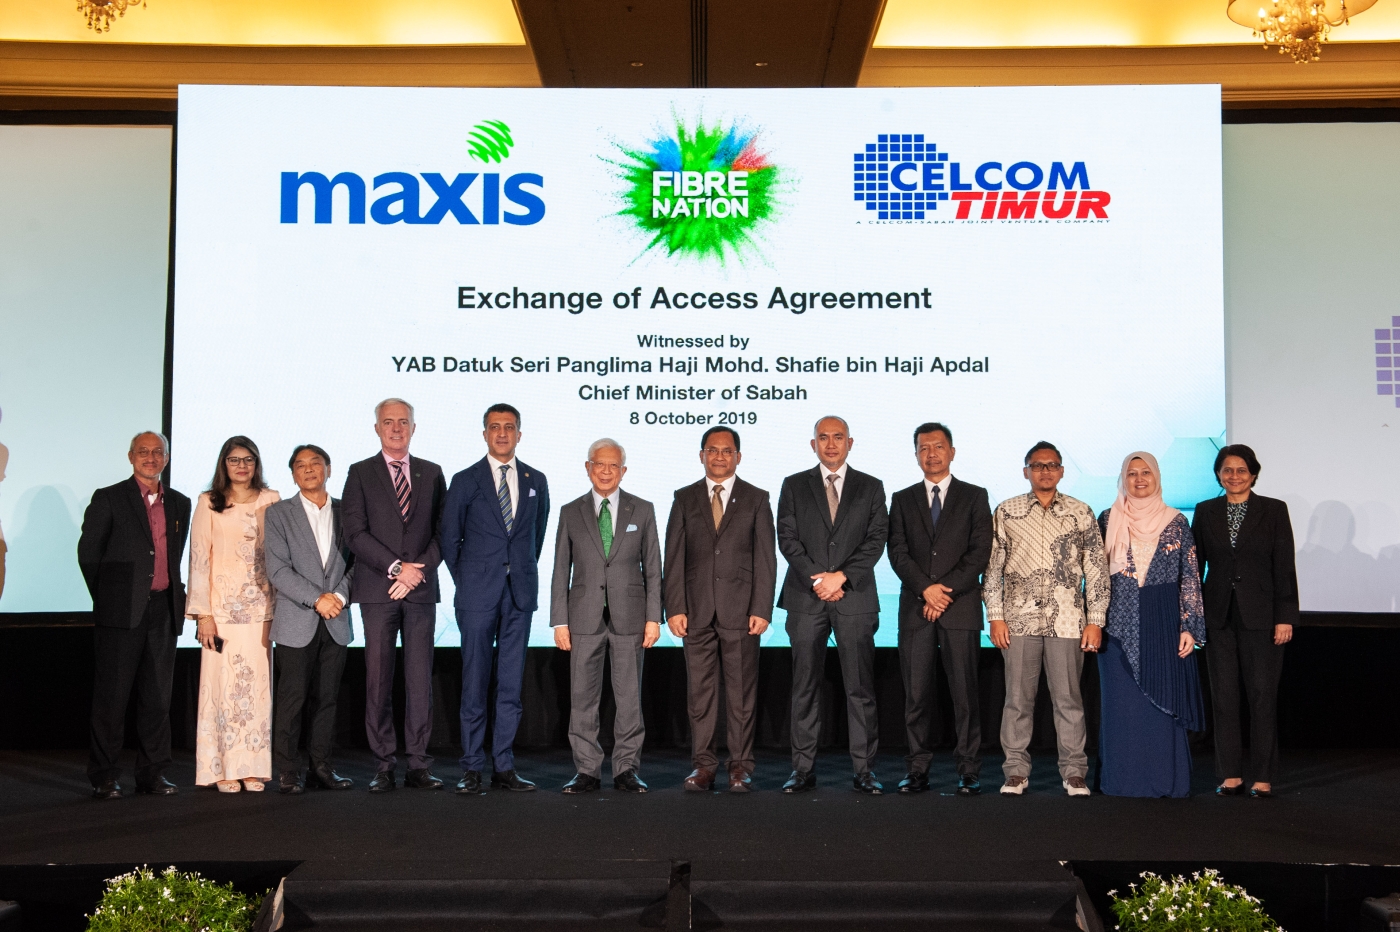 Maxis expands its fibre broadband coverage in Sabah via Celcom Timur